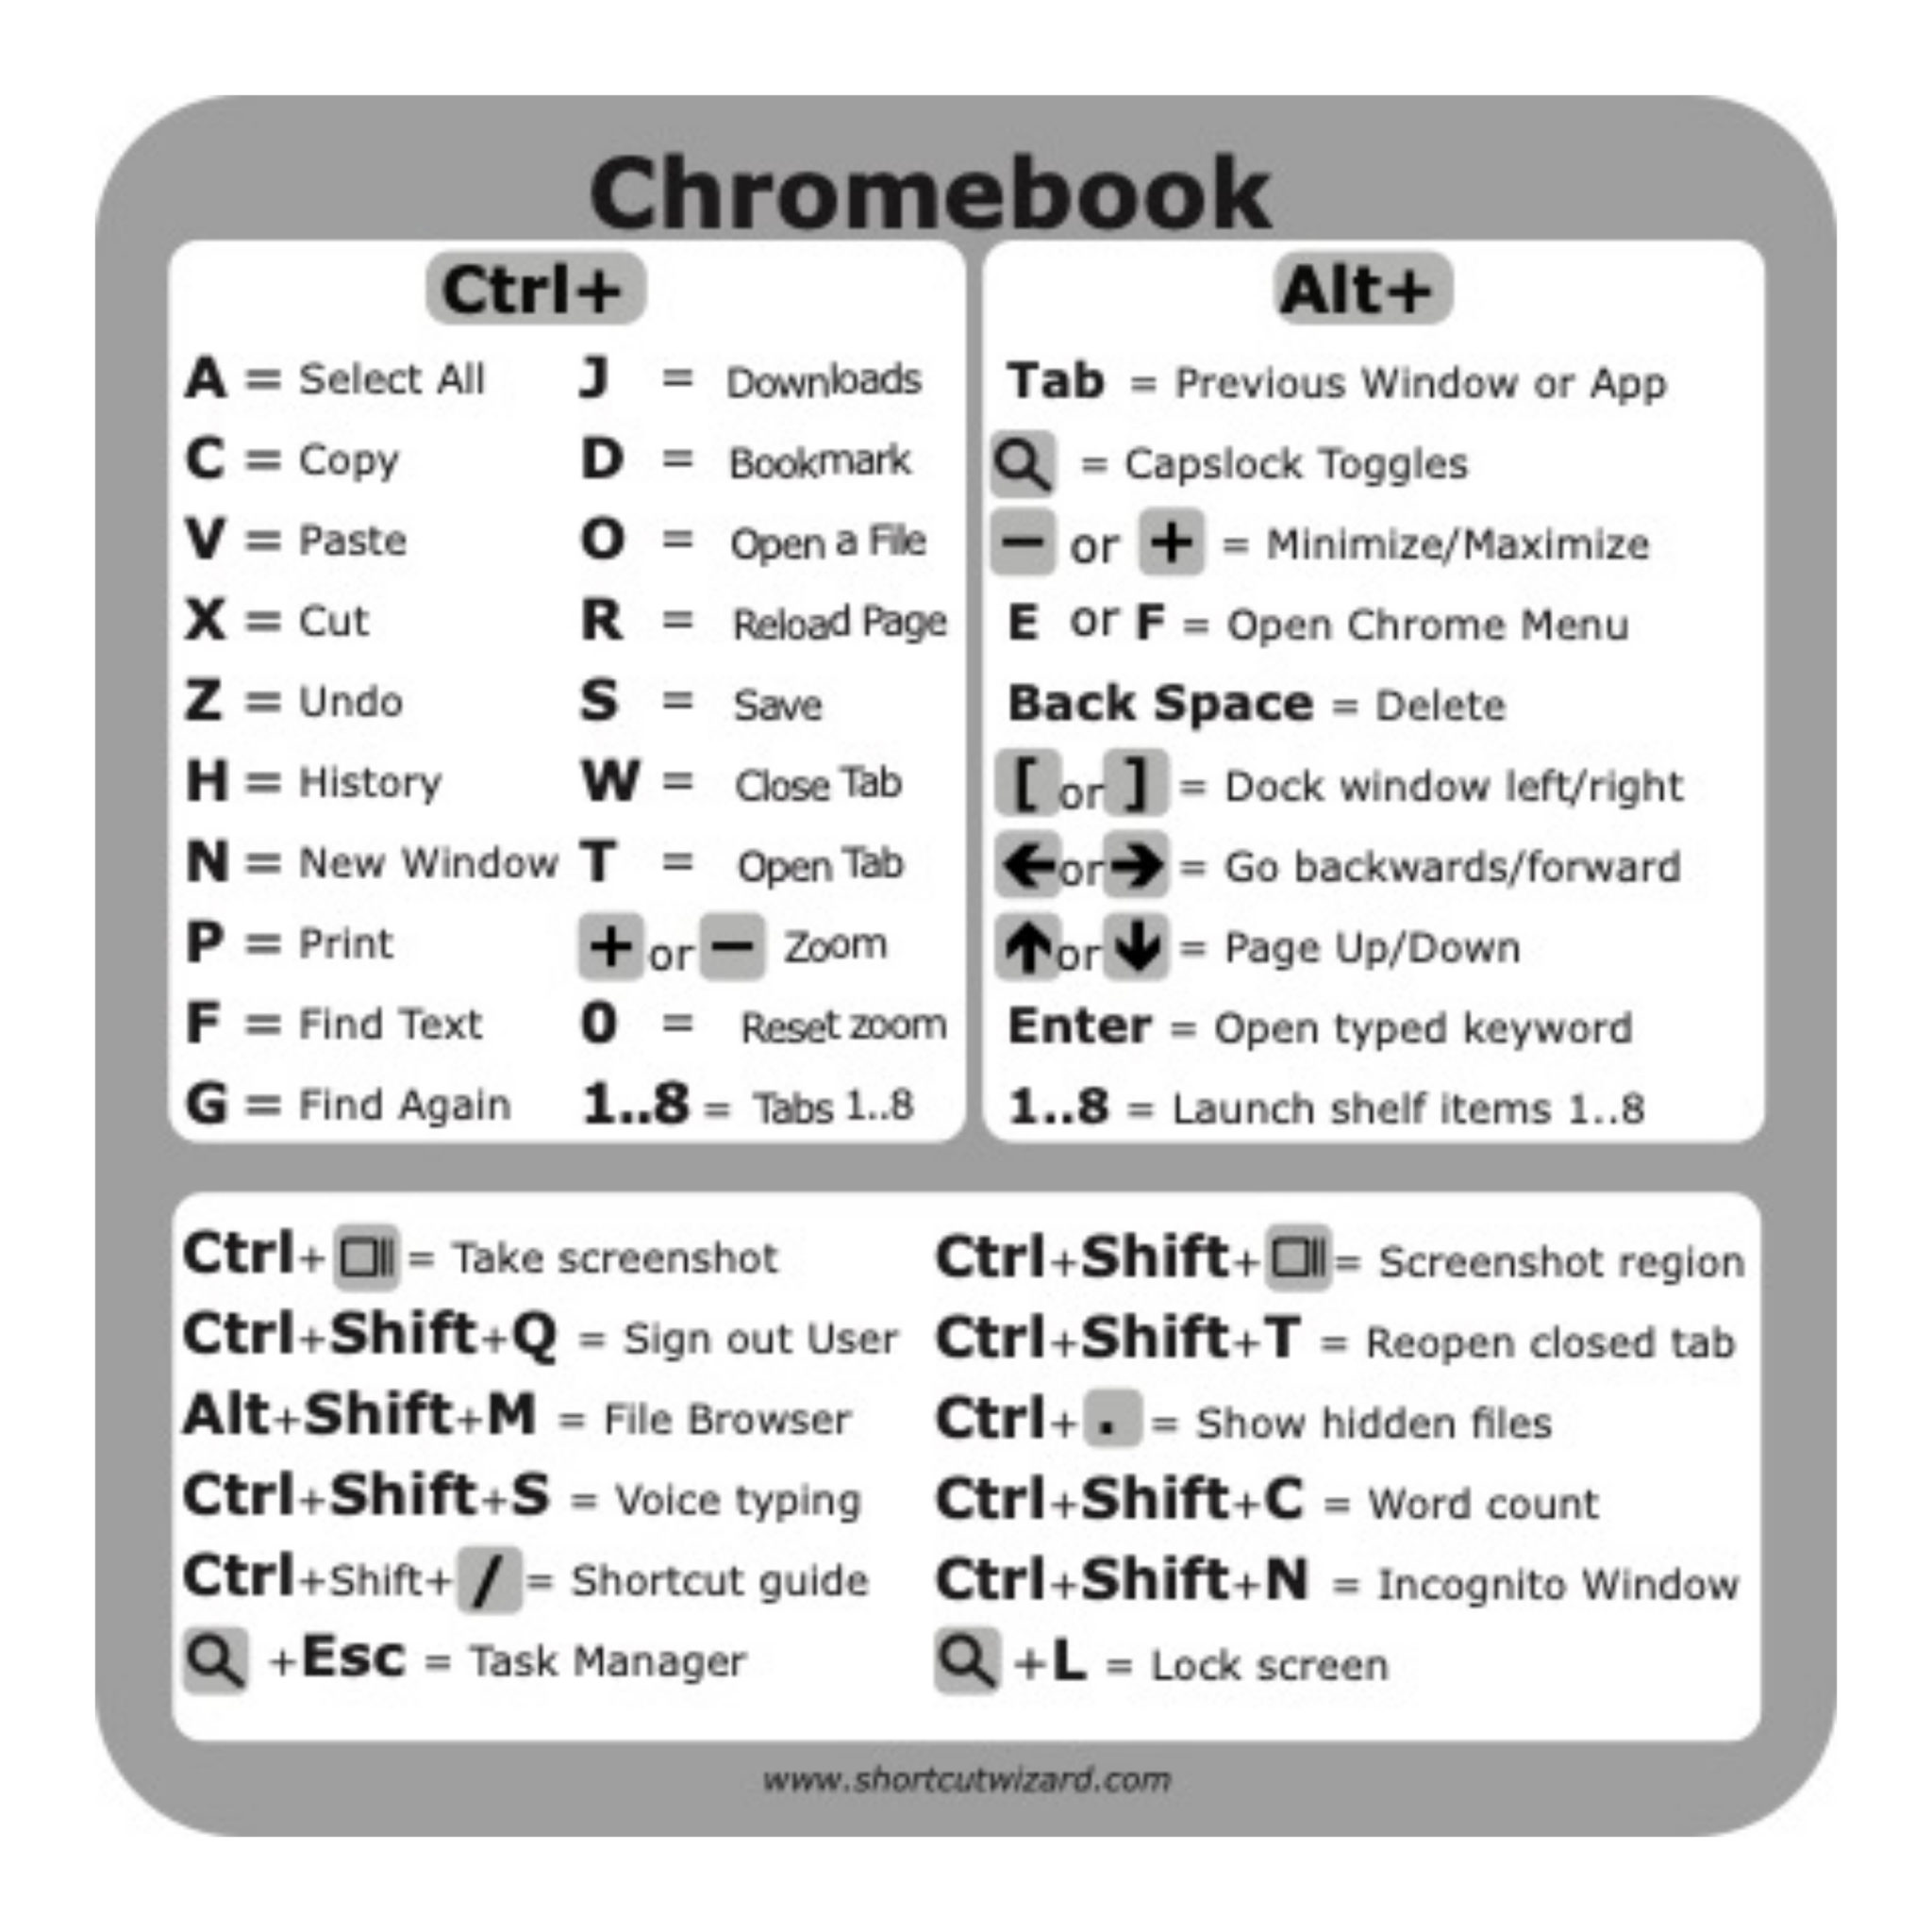 chromebook keyboard shortcut for subscript